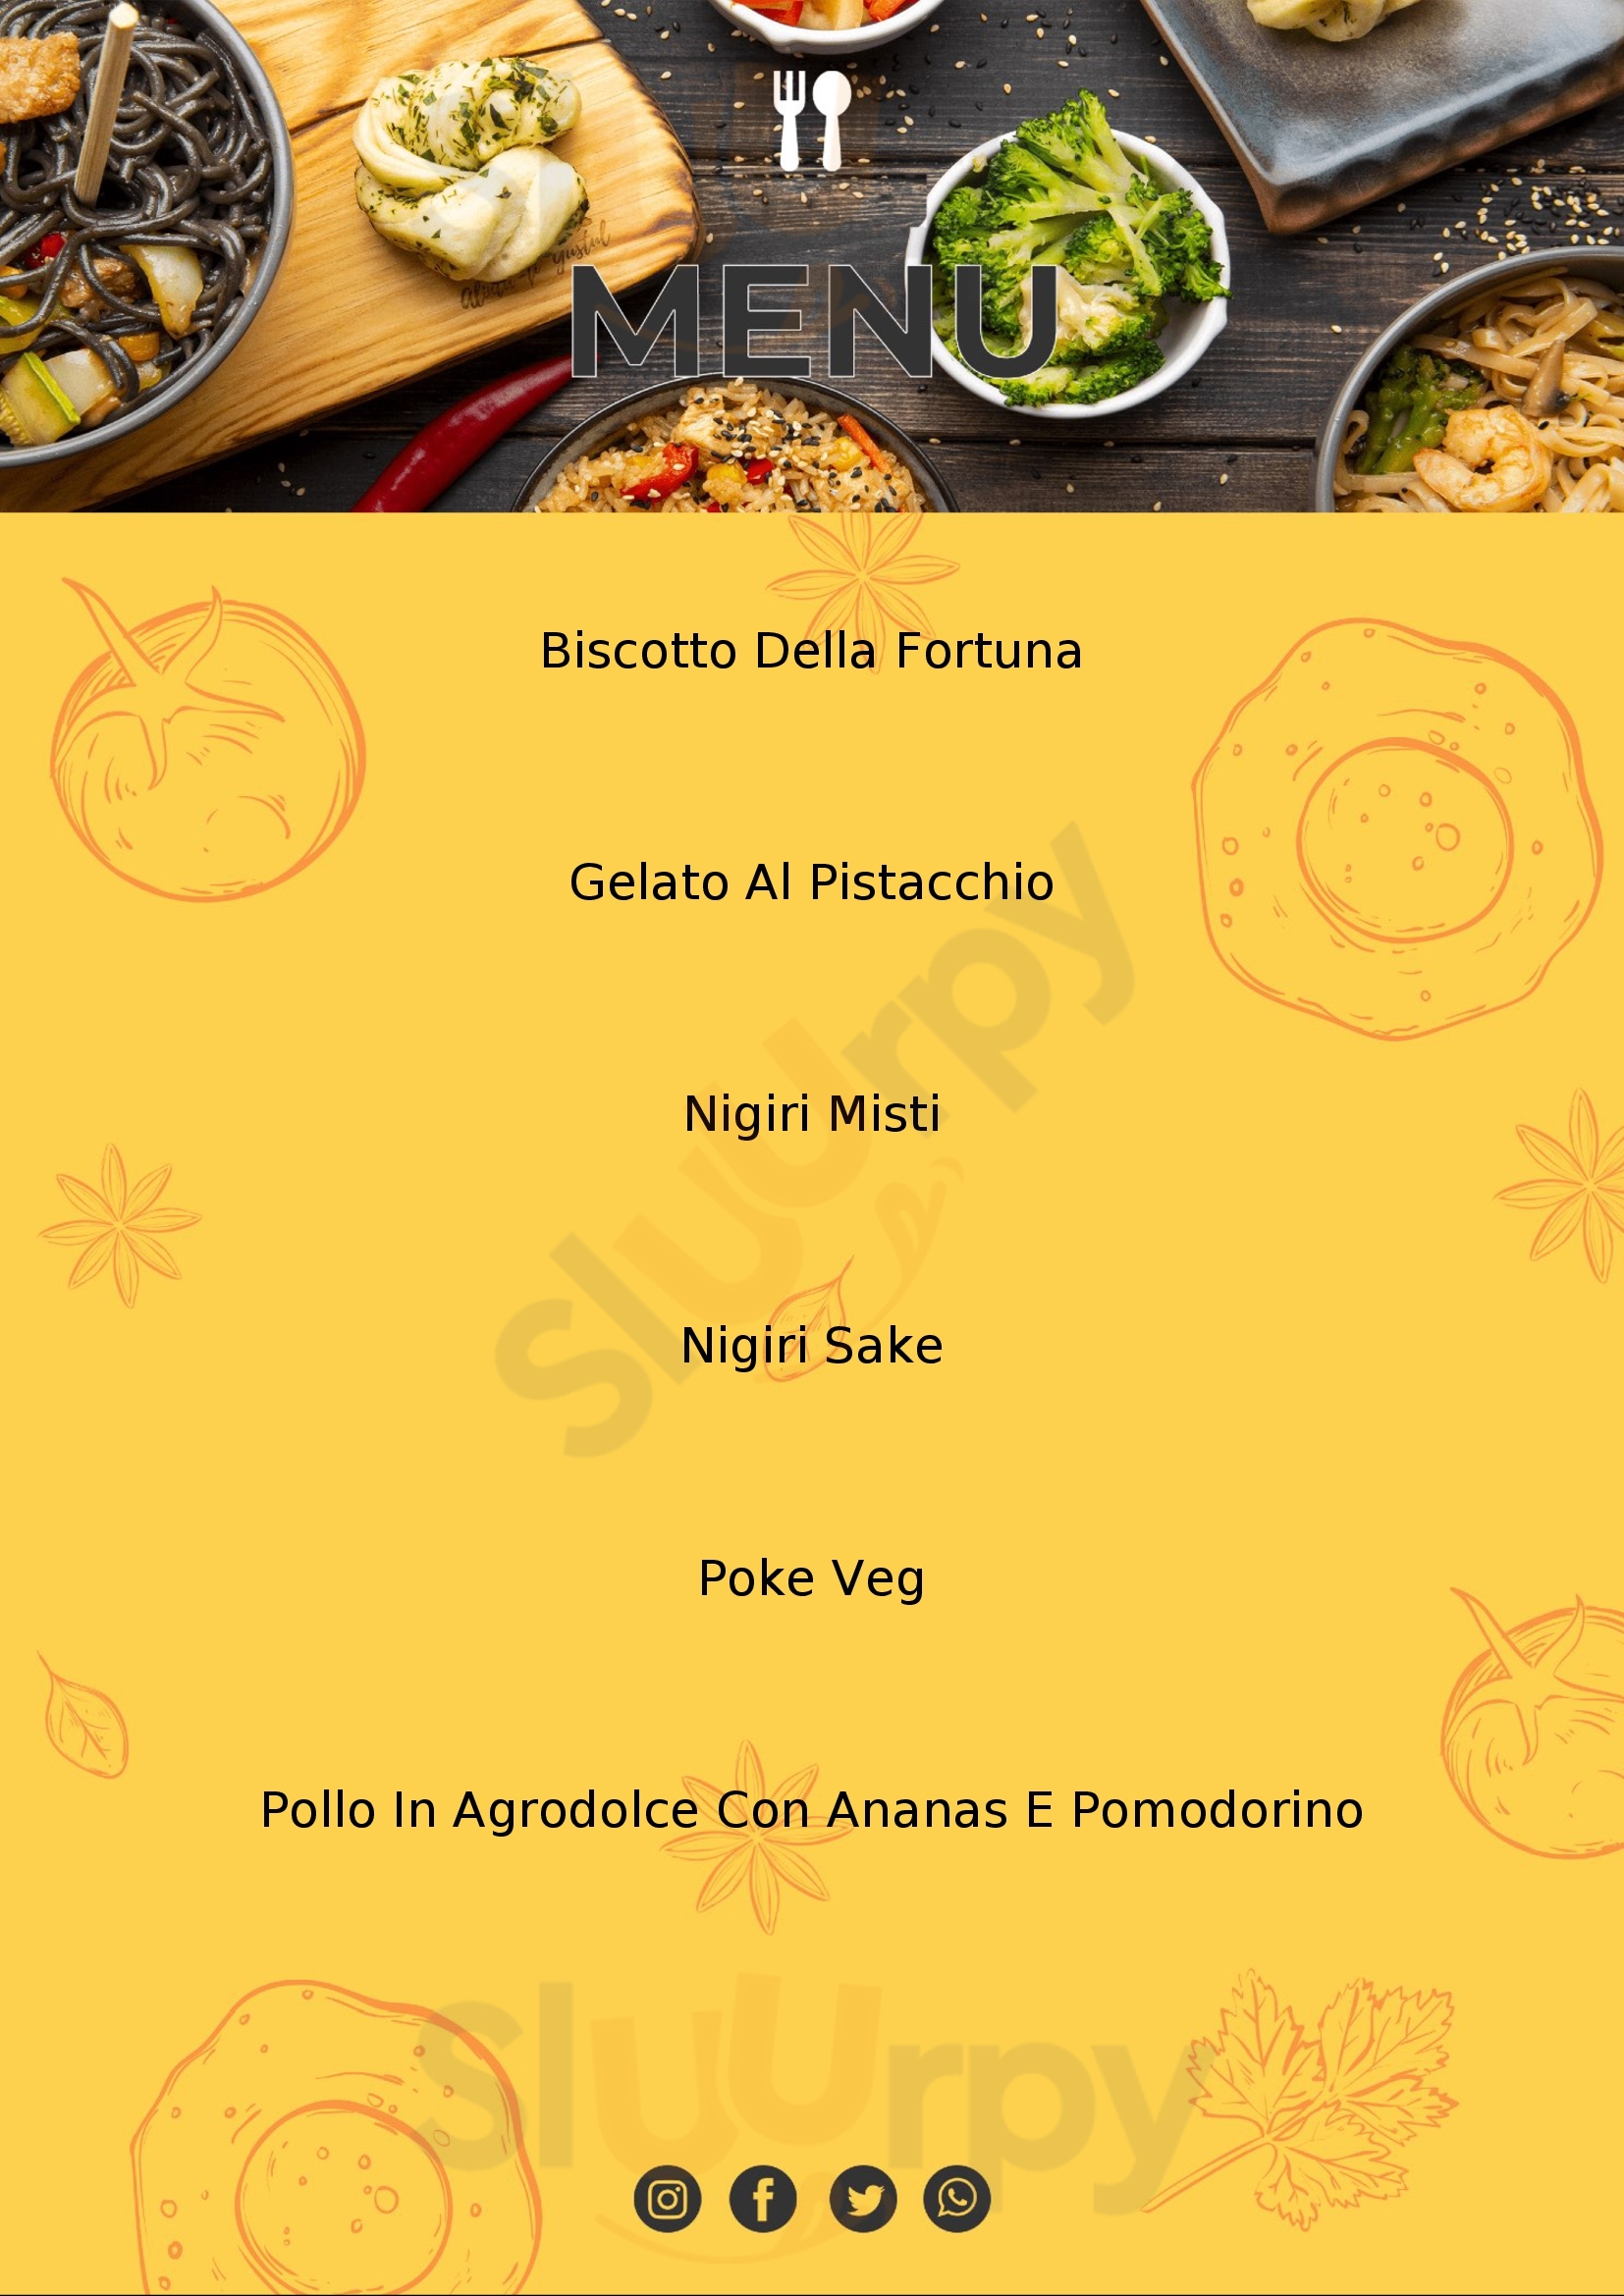 Sushi-One Ravenna menù 1 pagina